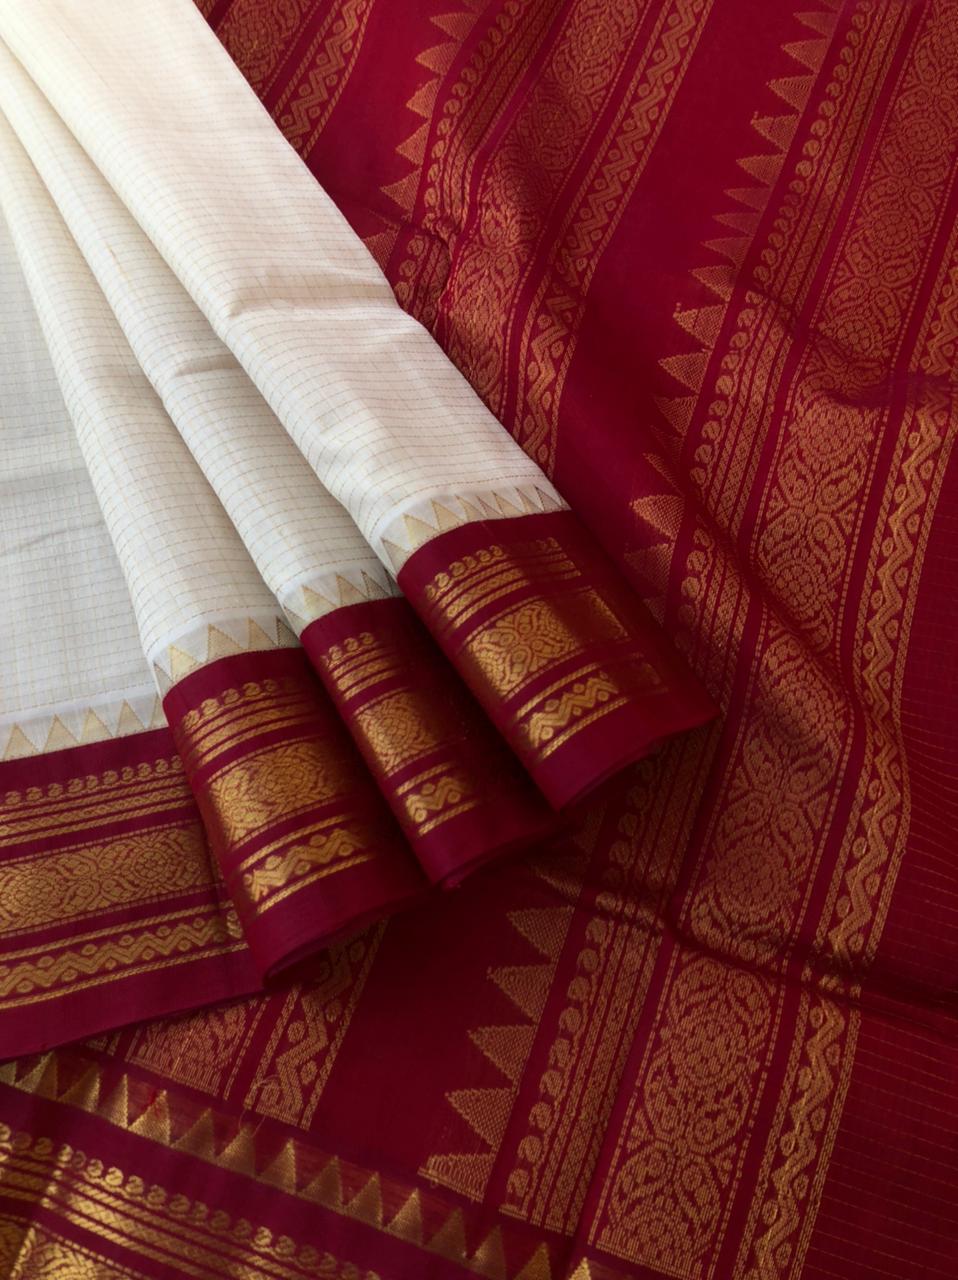 Korvai Silk Cottons - creamy off white and reddish maroon zari kattam